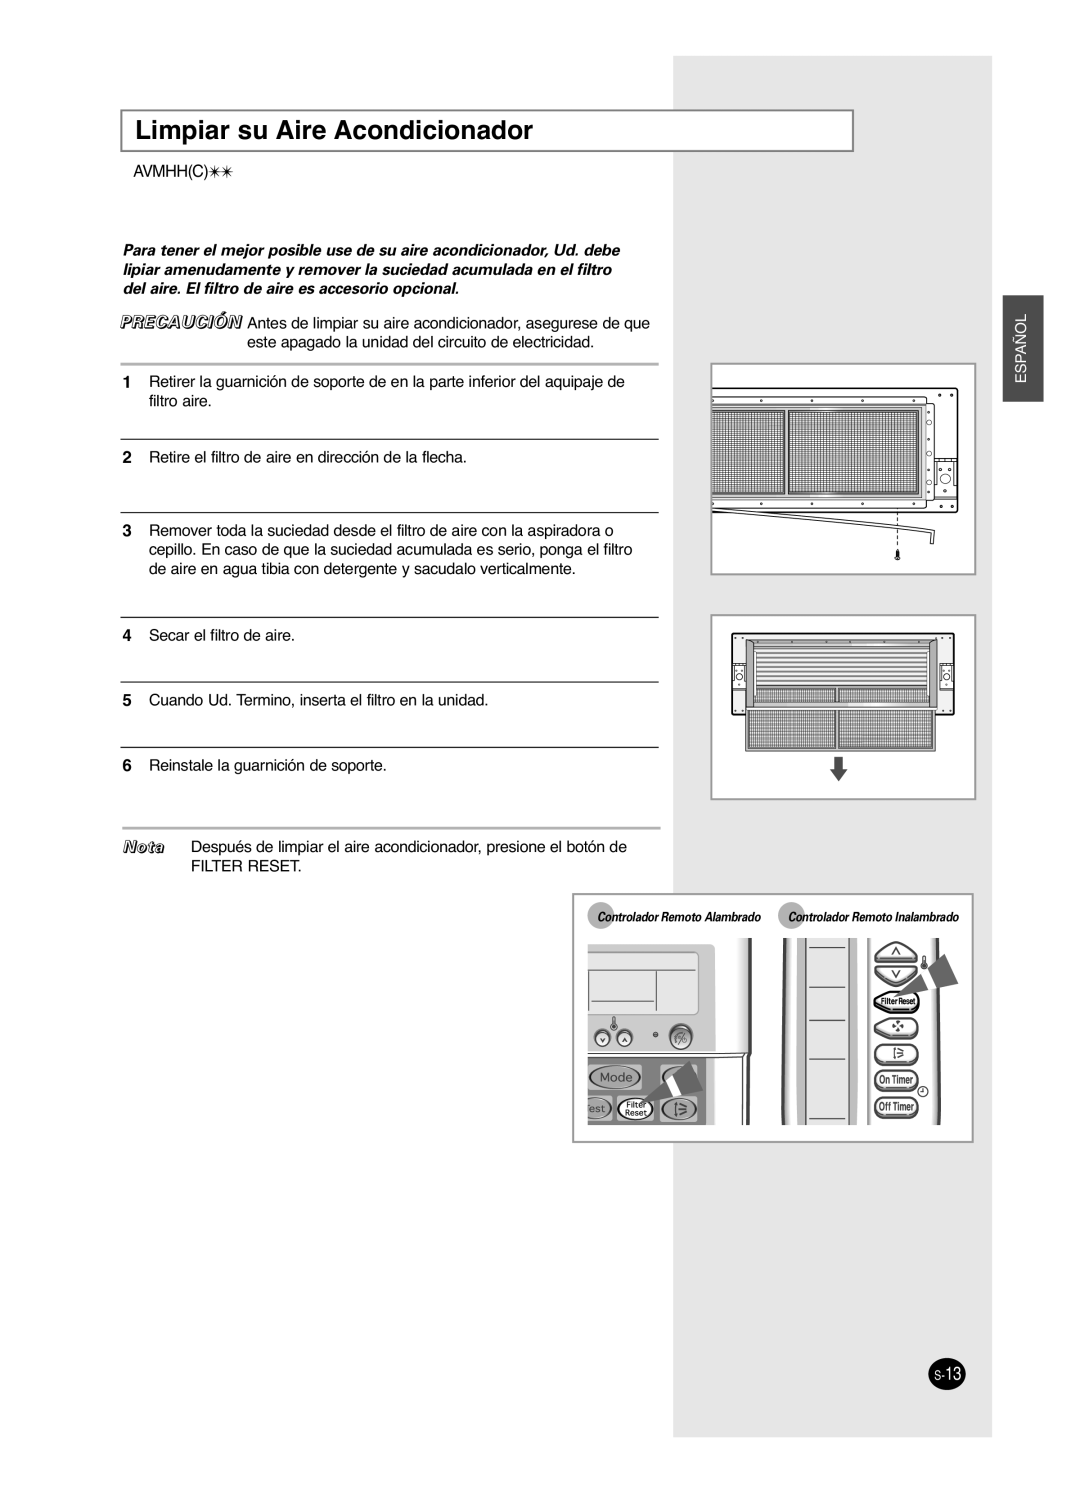 Samsung AVMHH(C) user manual Limpiar su Aire Acondicionador, Avmhhc, Español 